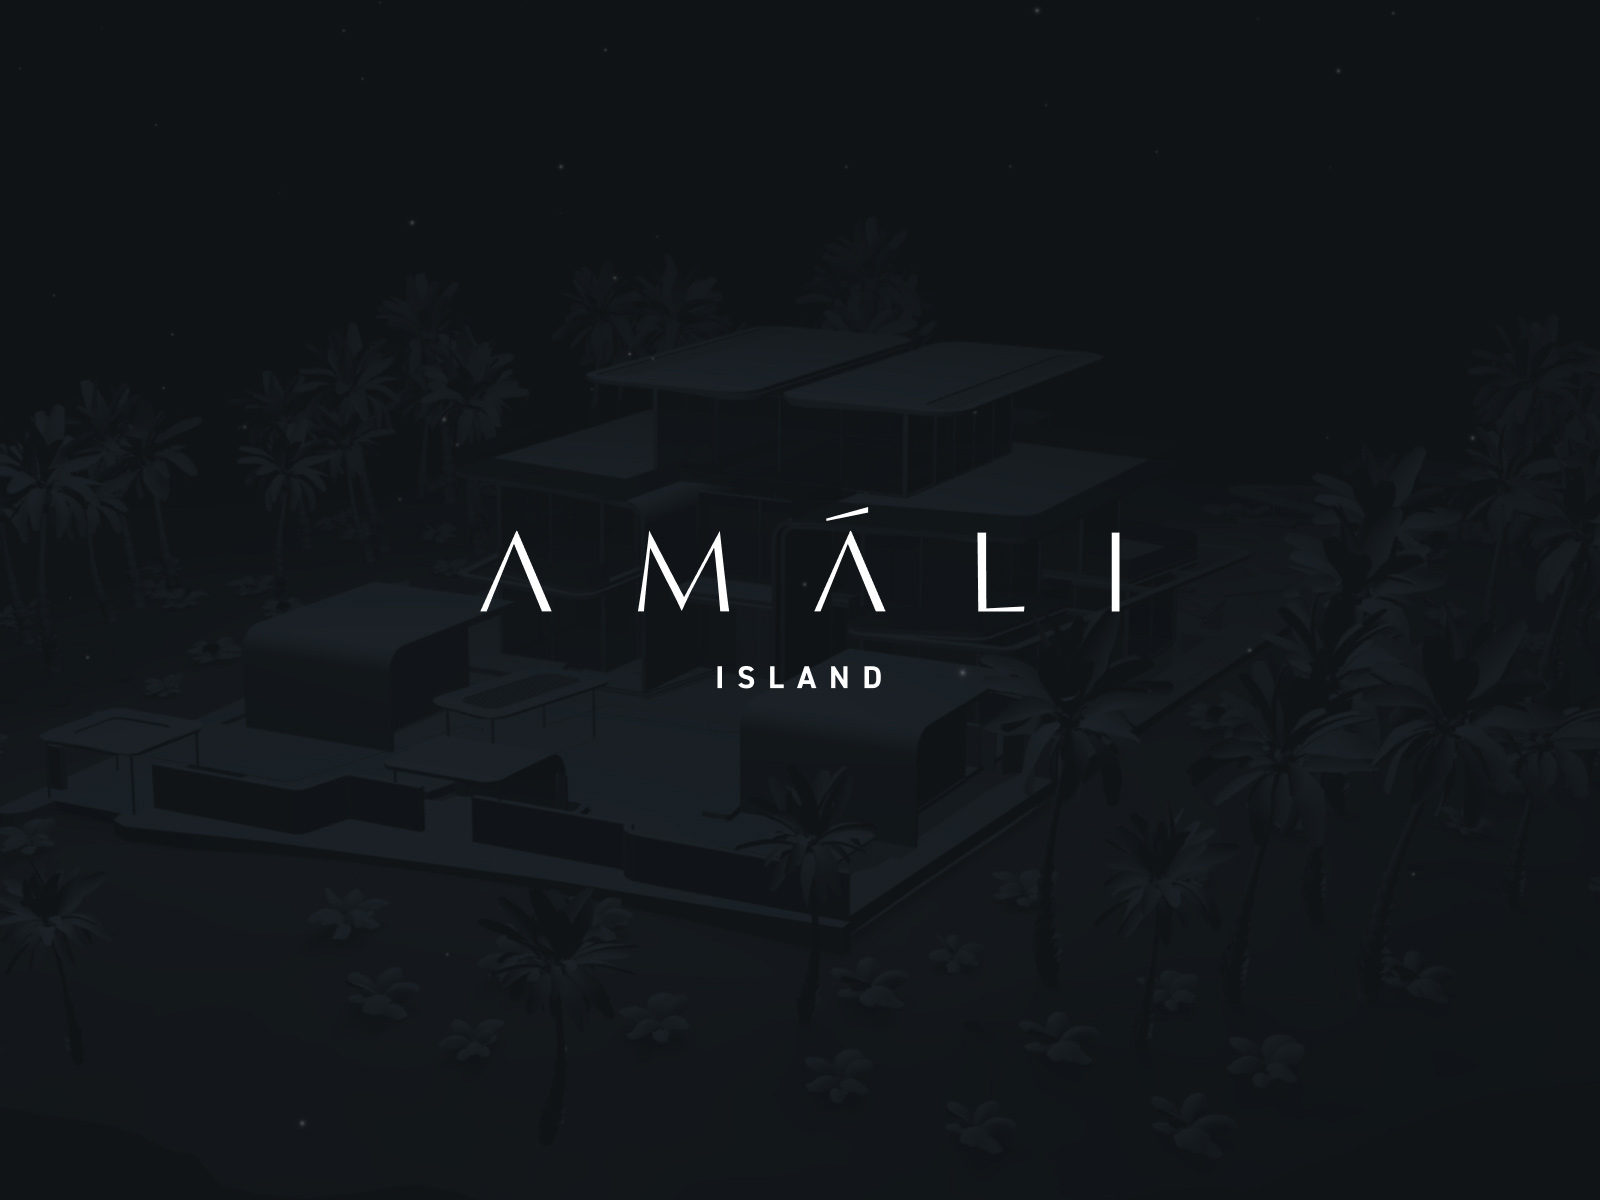 Amali Island experience